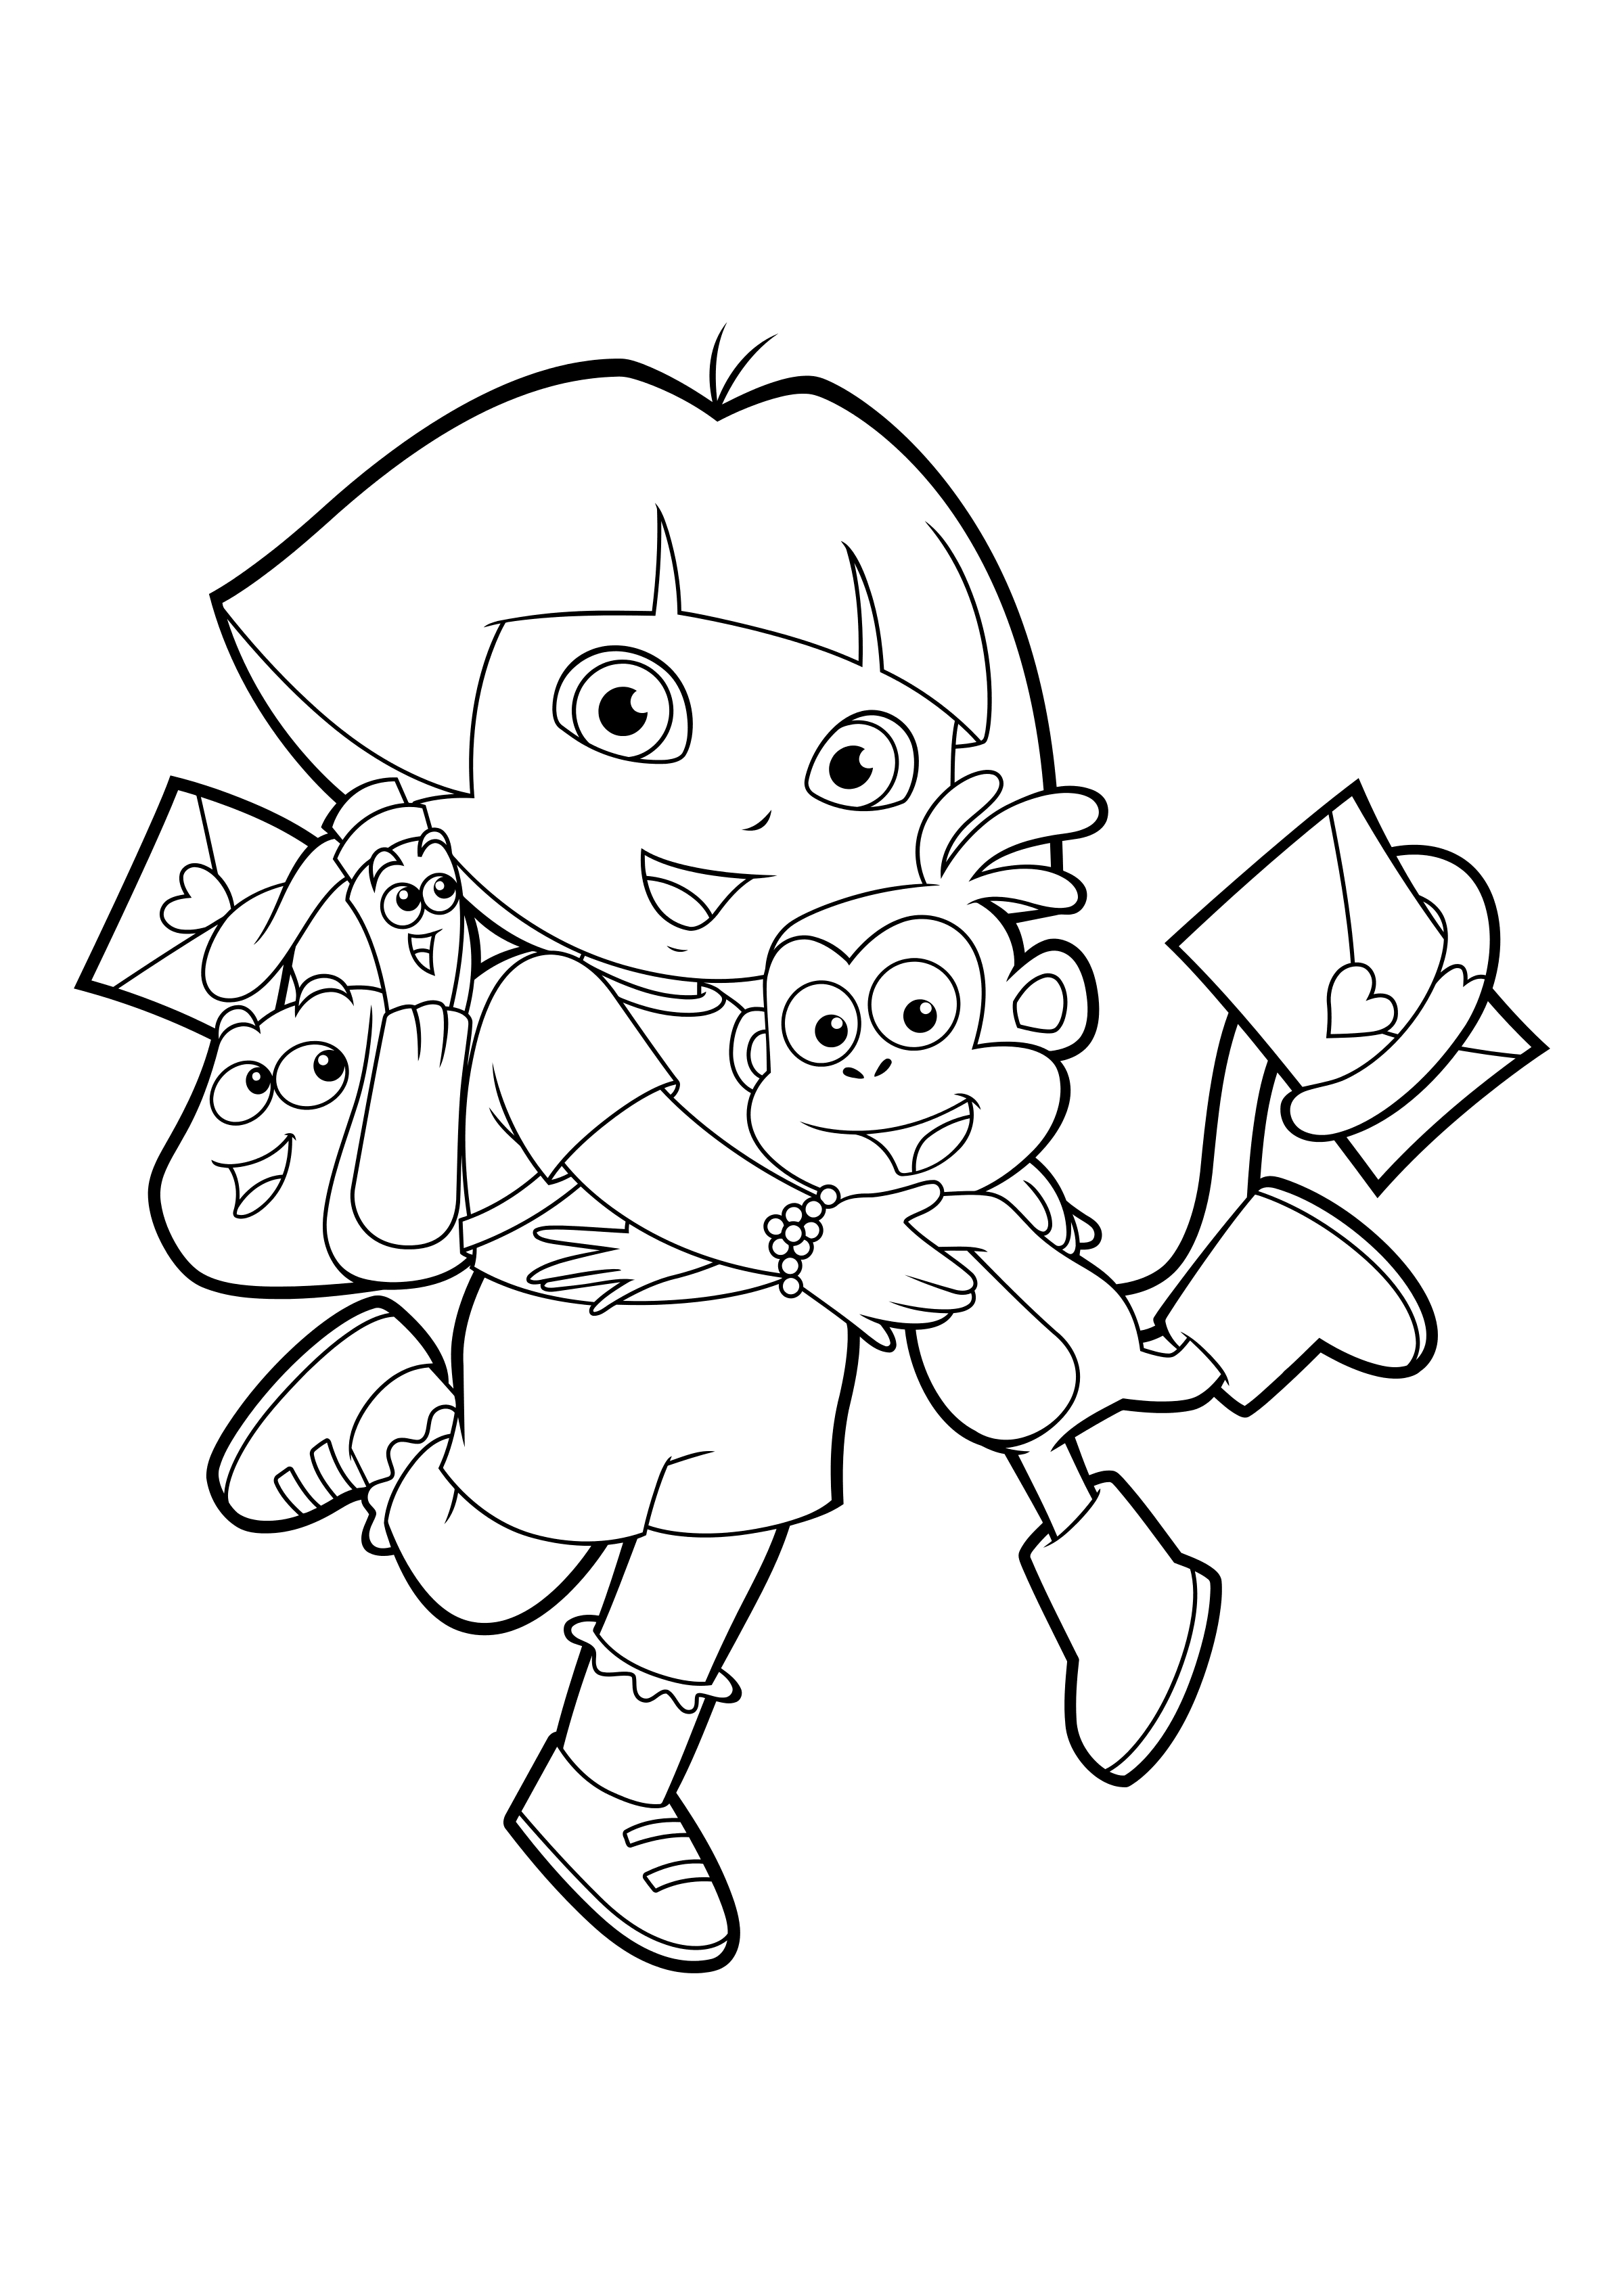 Coloring Dora the Explorer - Printable